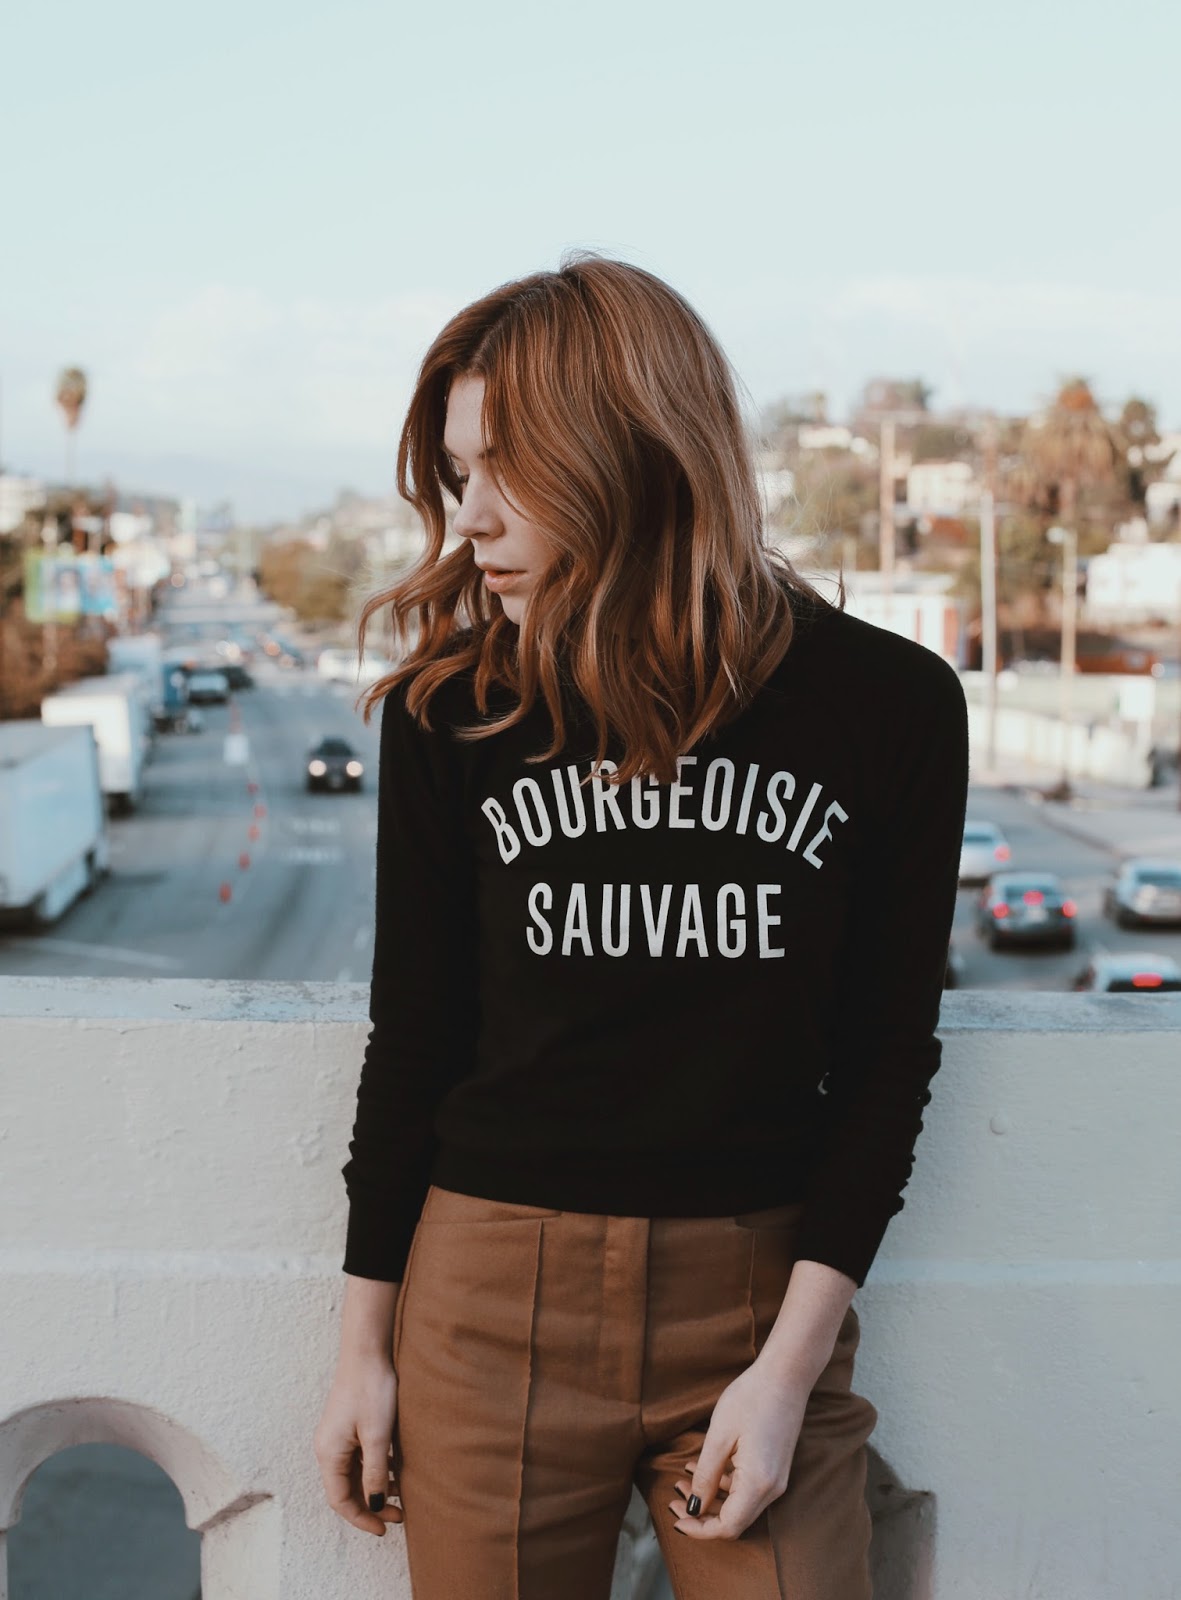 Clare V. Bourgeoisie Sauvage Sweatshirt